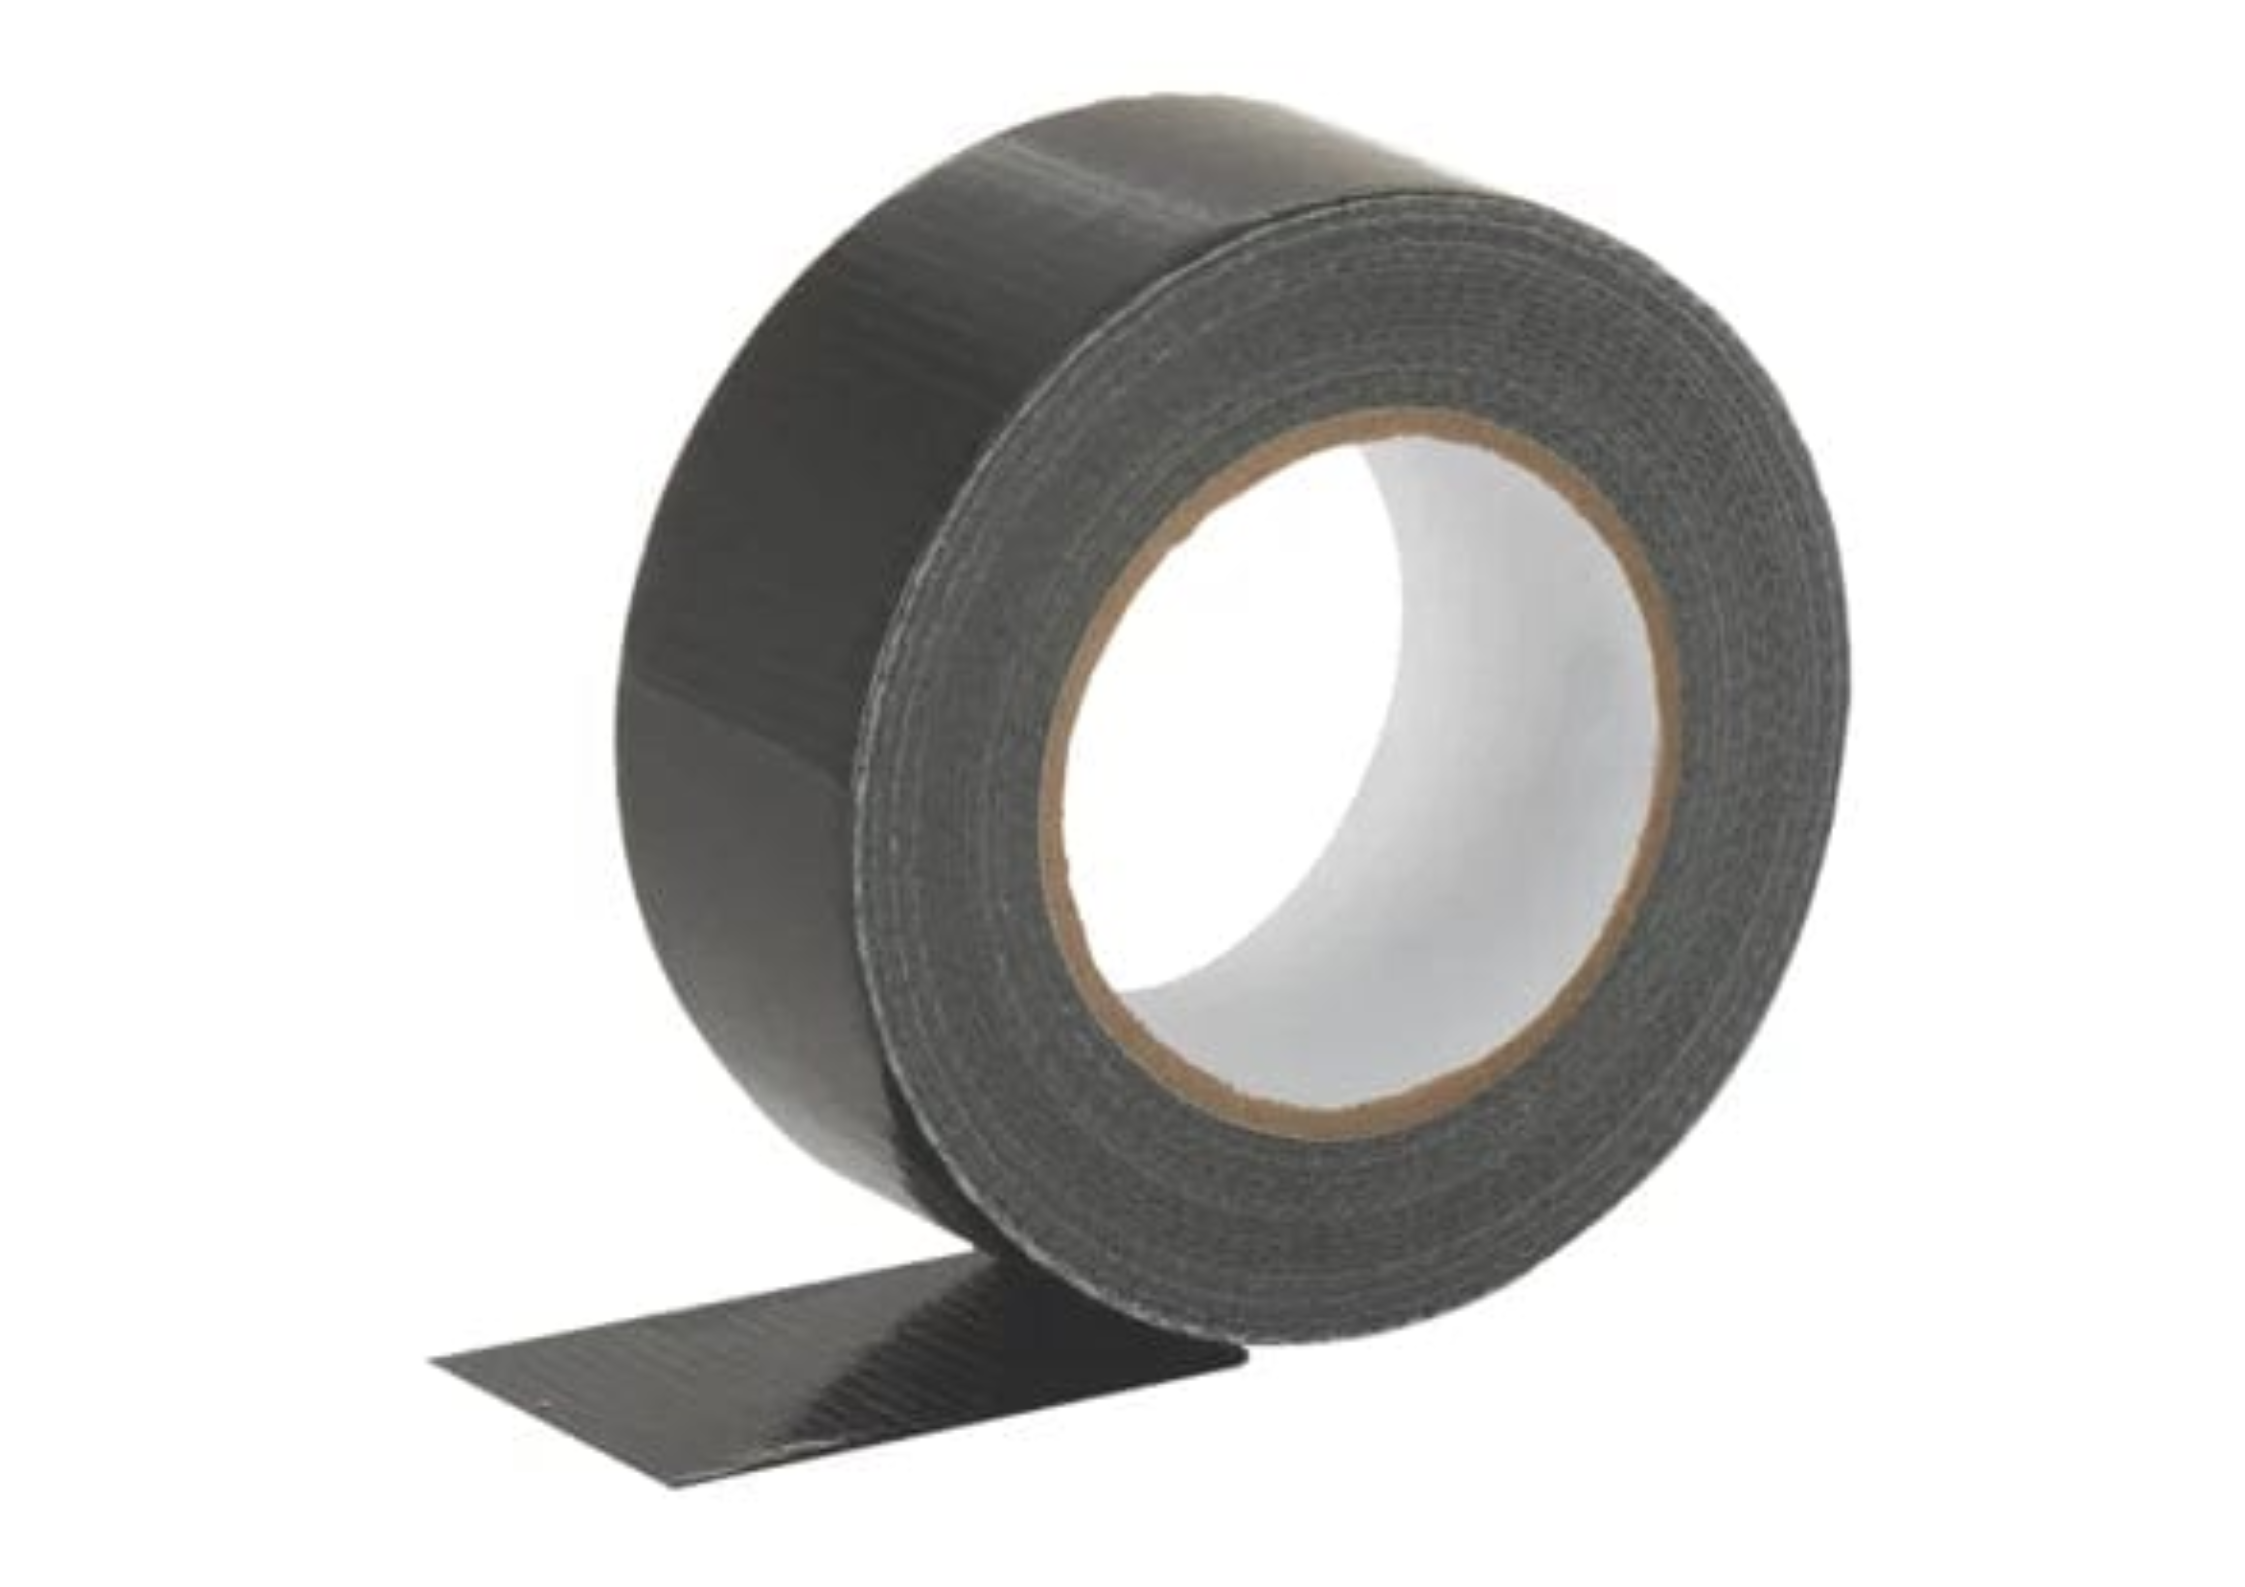 Builders Merchant Direct Hardware Tape Black Cloth Tape